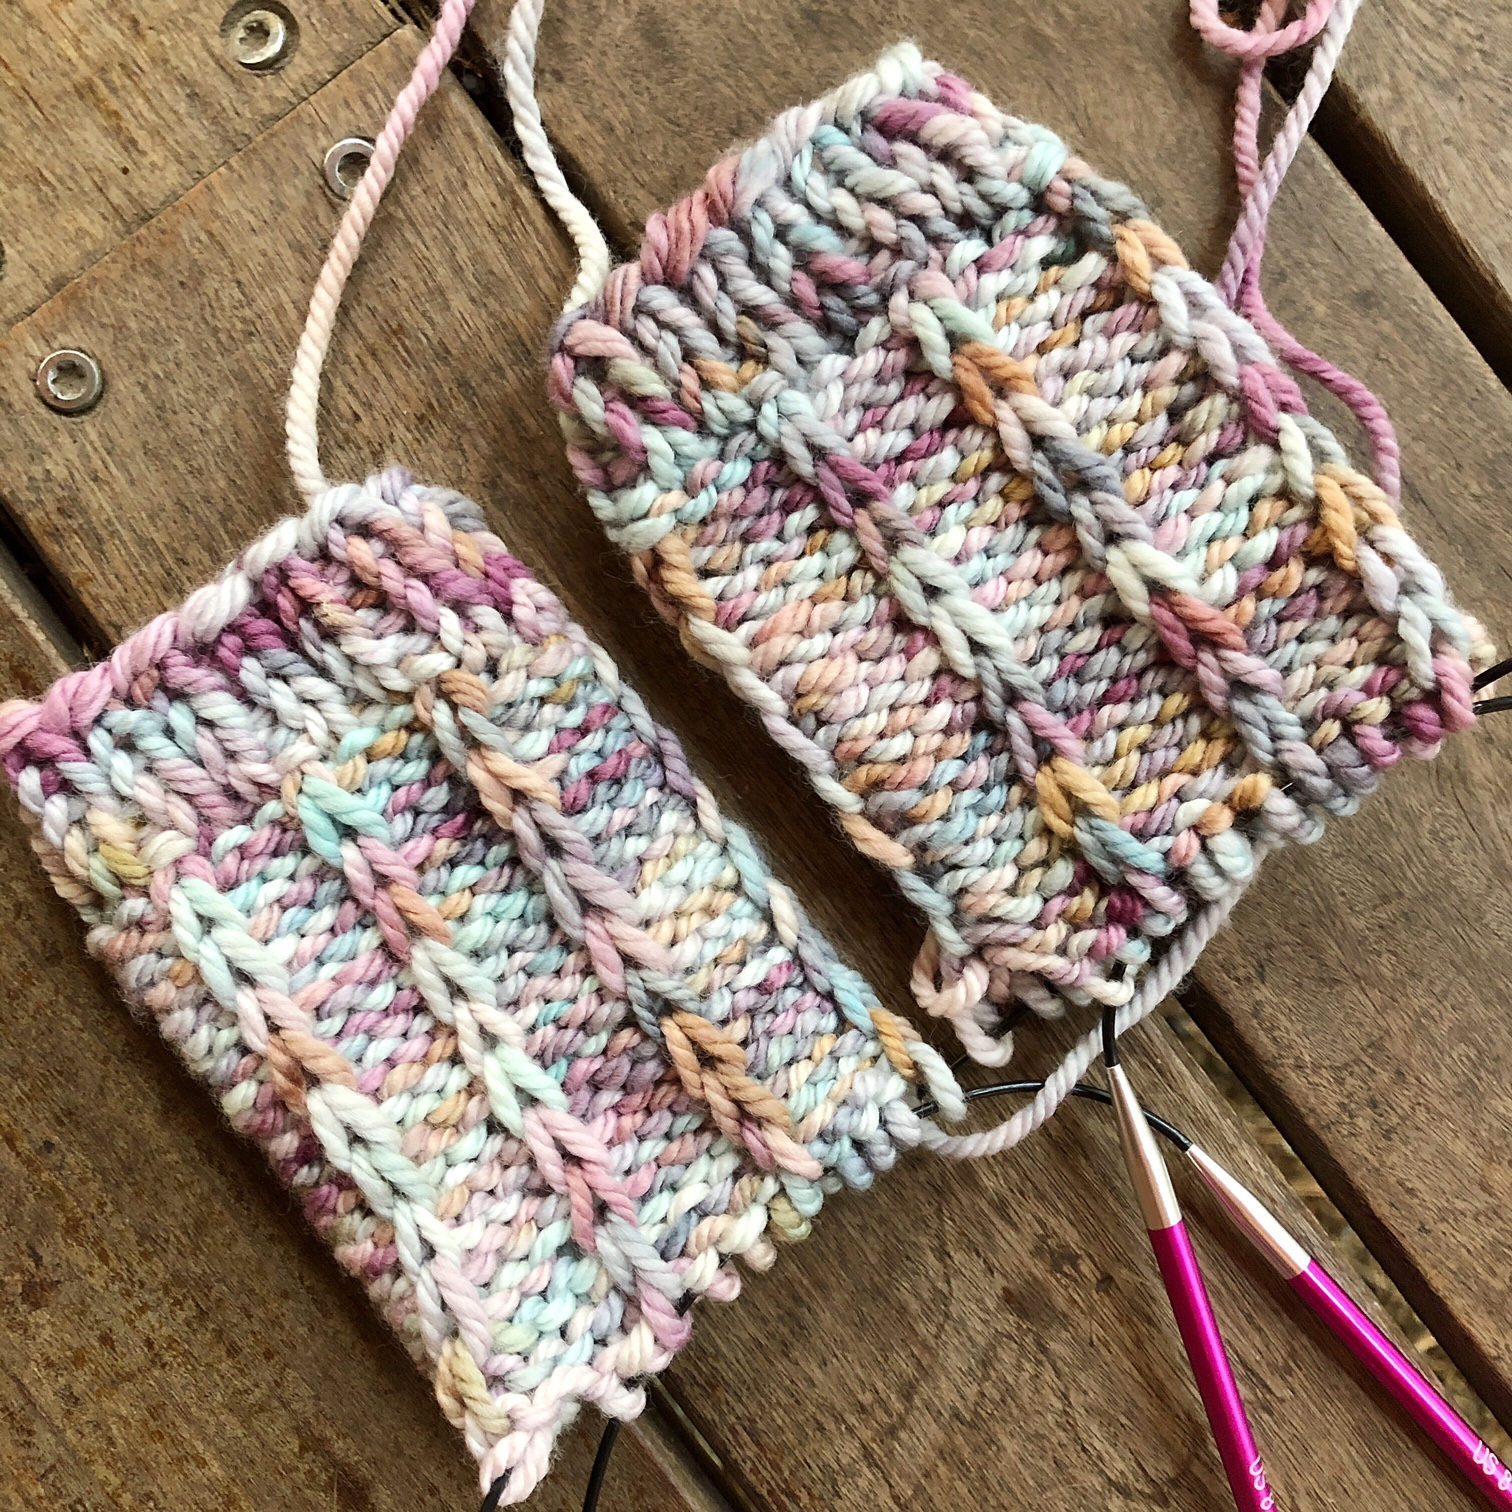 Knitting Socks On Circular Needles Pattern Knit Socks Two At A Time Magic Loop Method Vickie Howell Blog